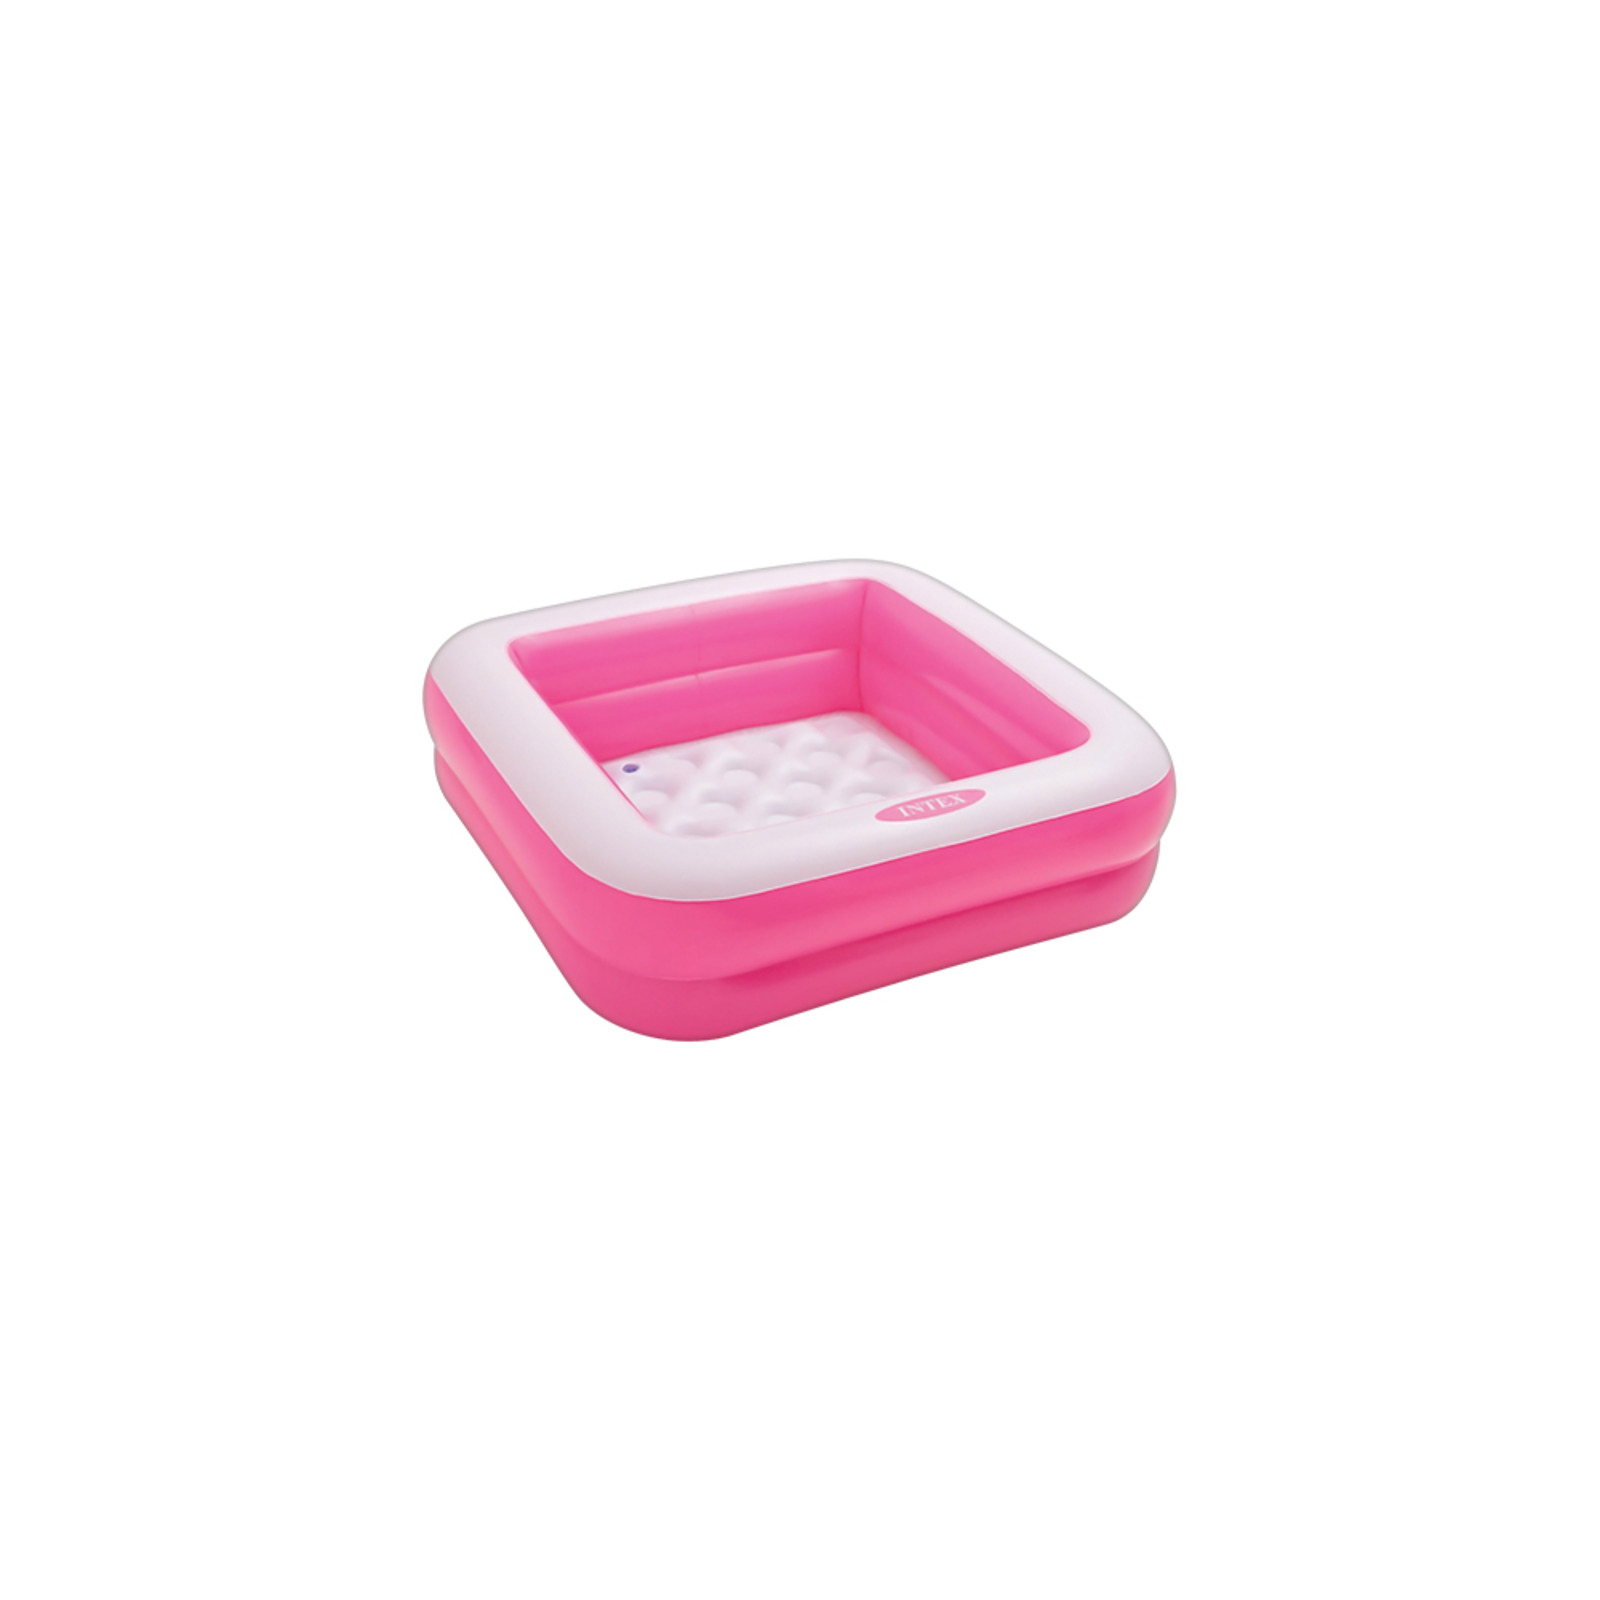 Бассейн Intex Pink (Intex 57100 pink)